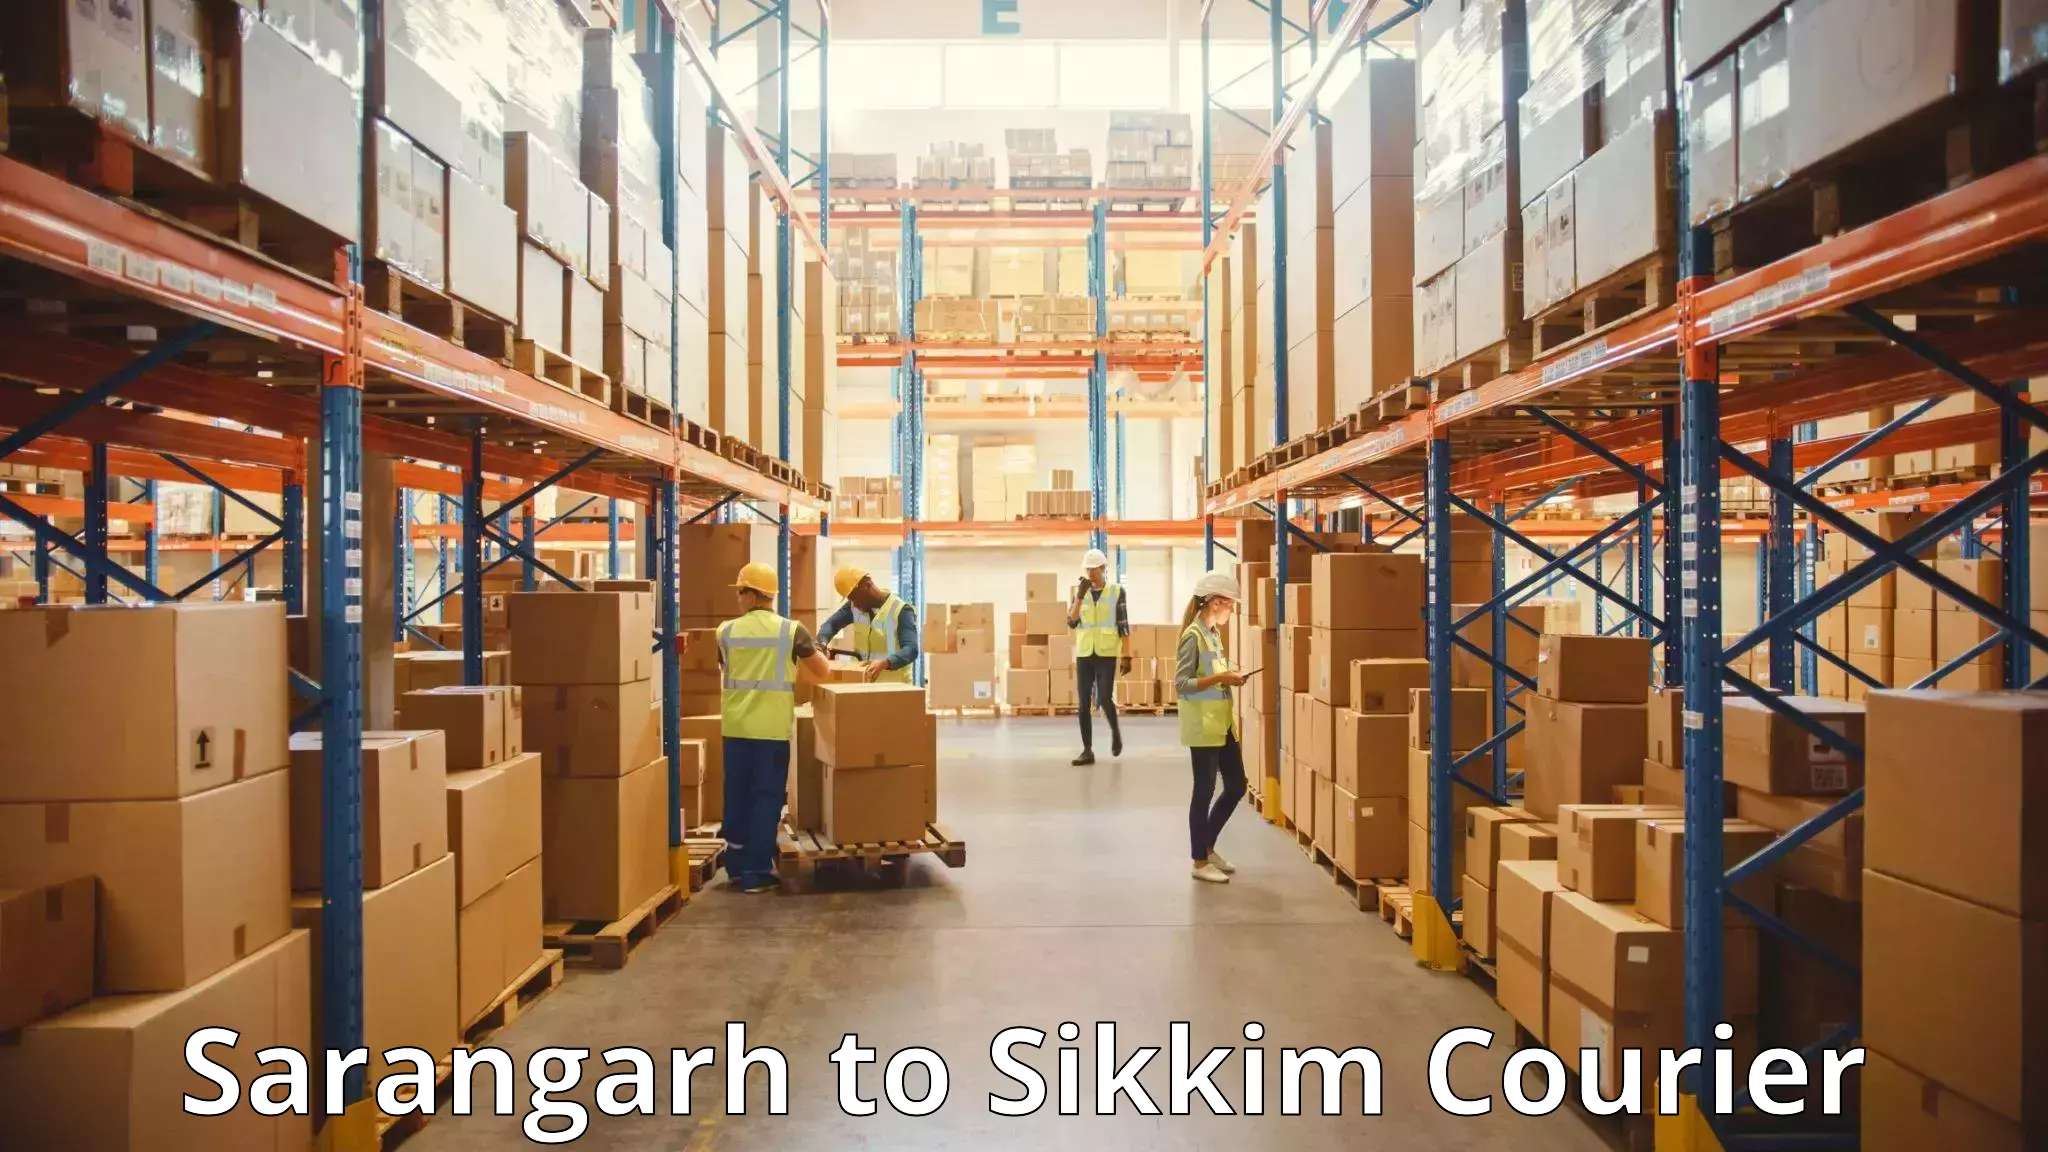 Baggage shipping experience Sarangarh to Pelling